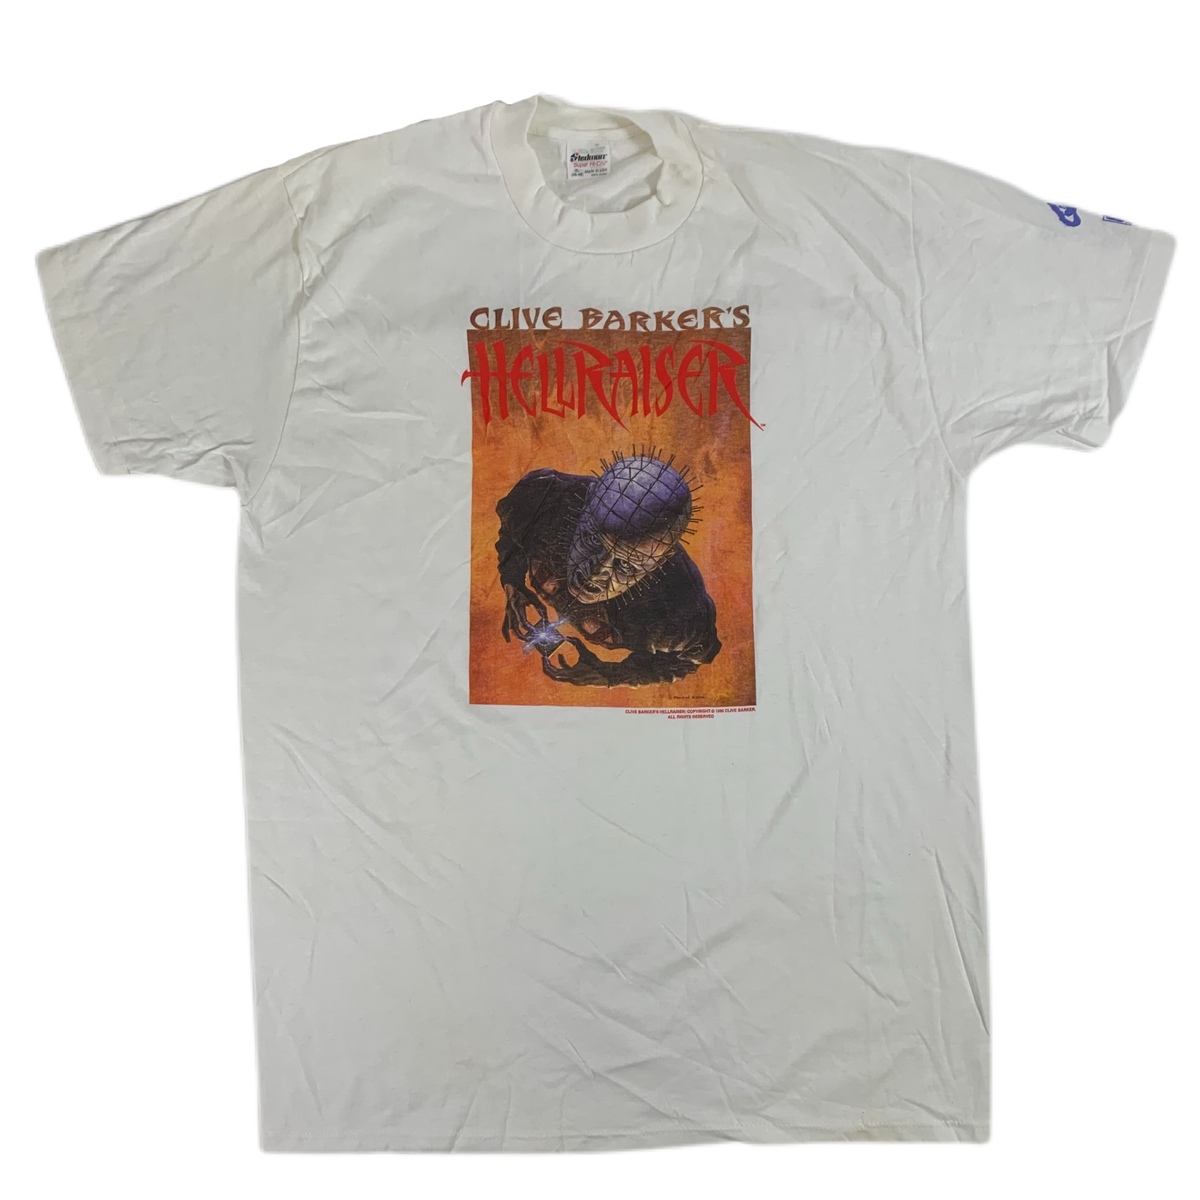 Vintage Hellraiser “Clive Barker” Graphitti T-Shirt